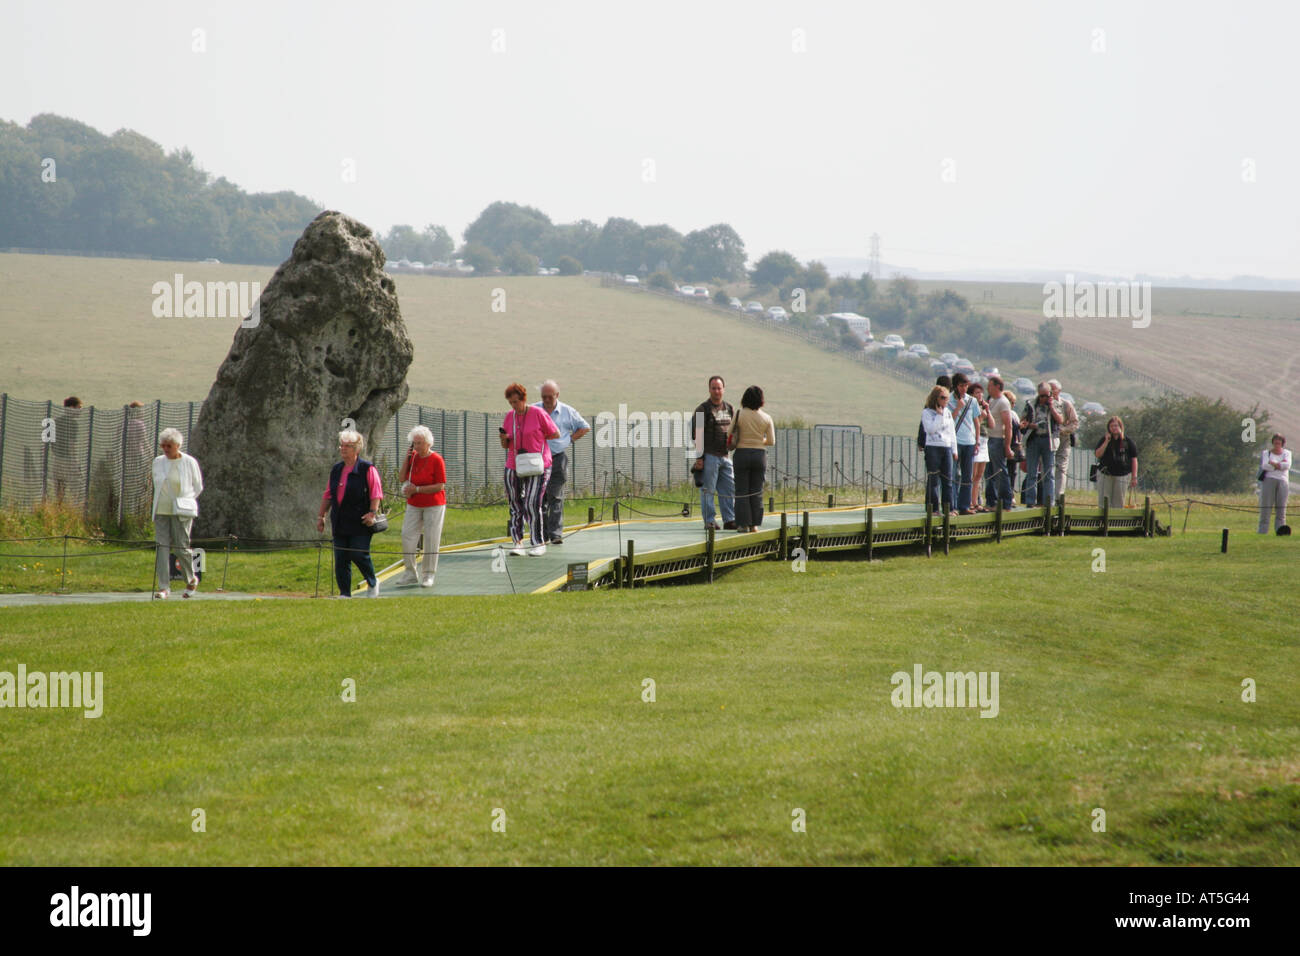 Wiltshire Stonehenge Historic standing stone circle. Stock Photo